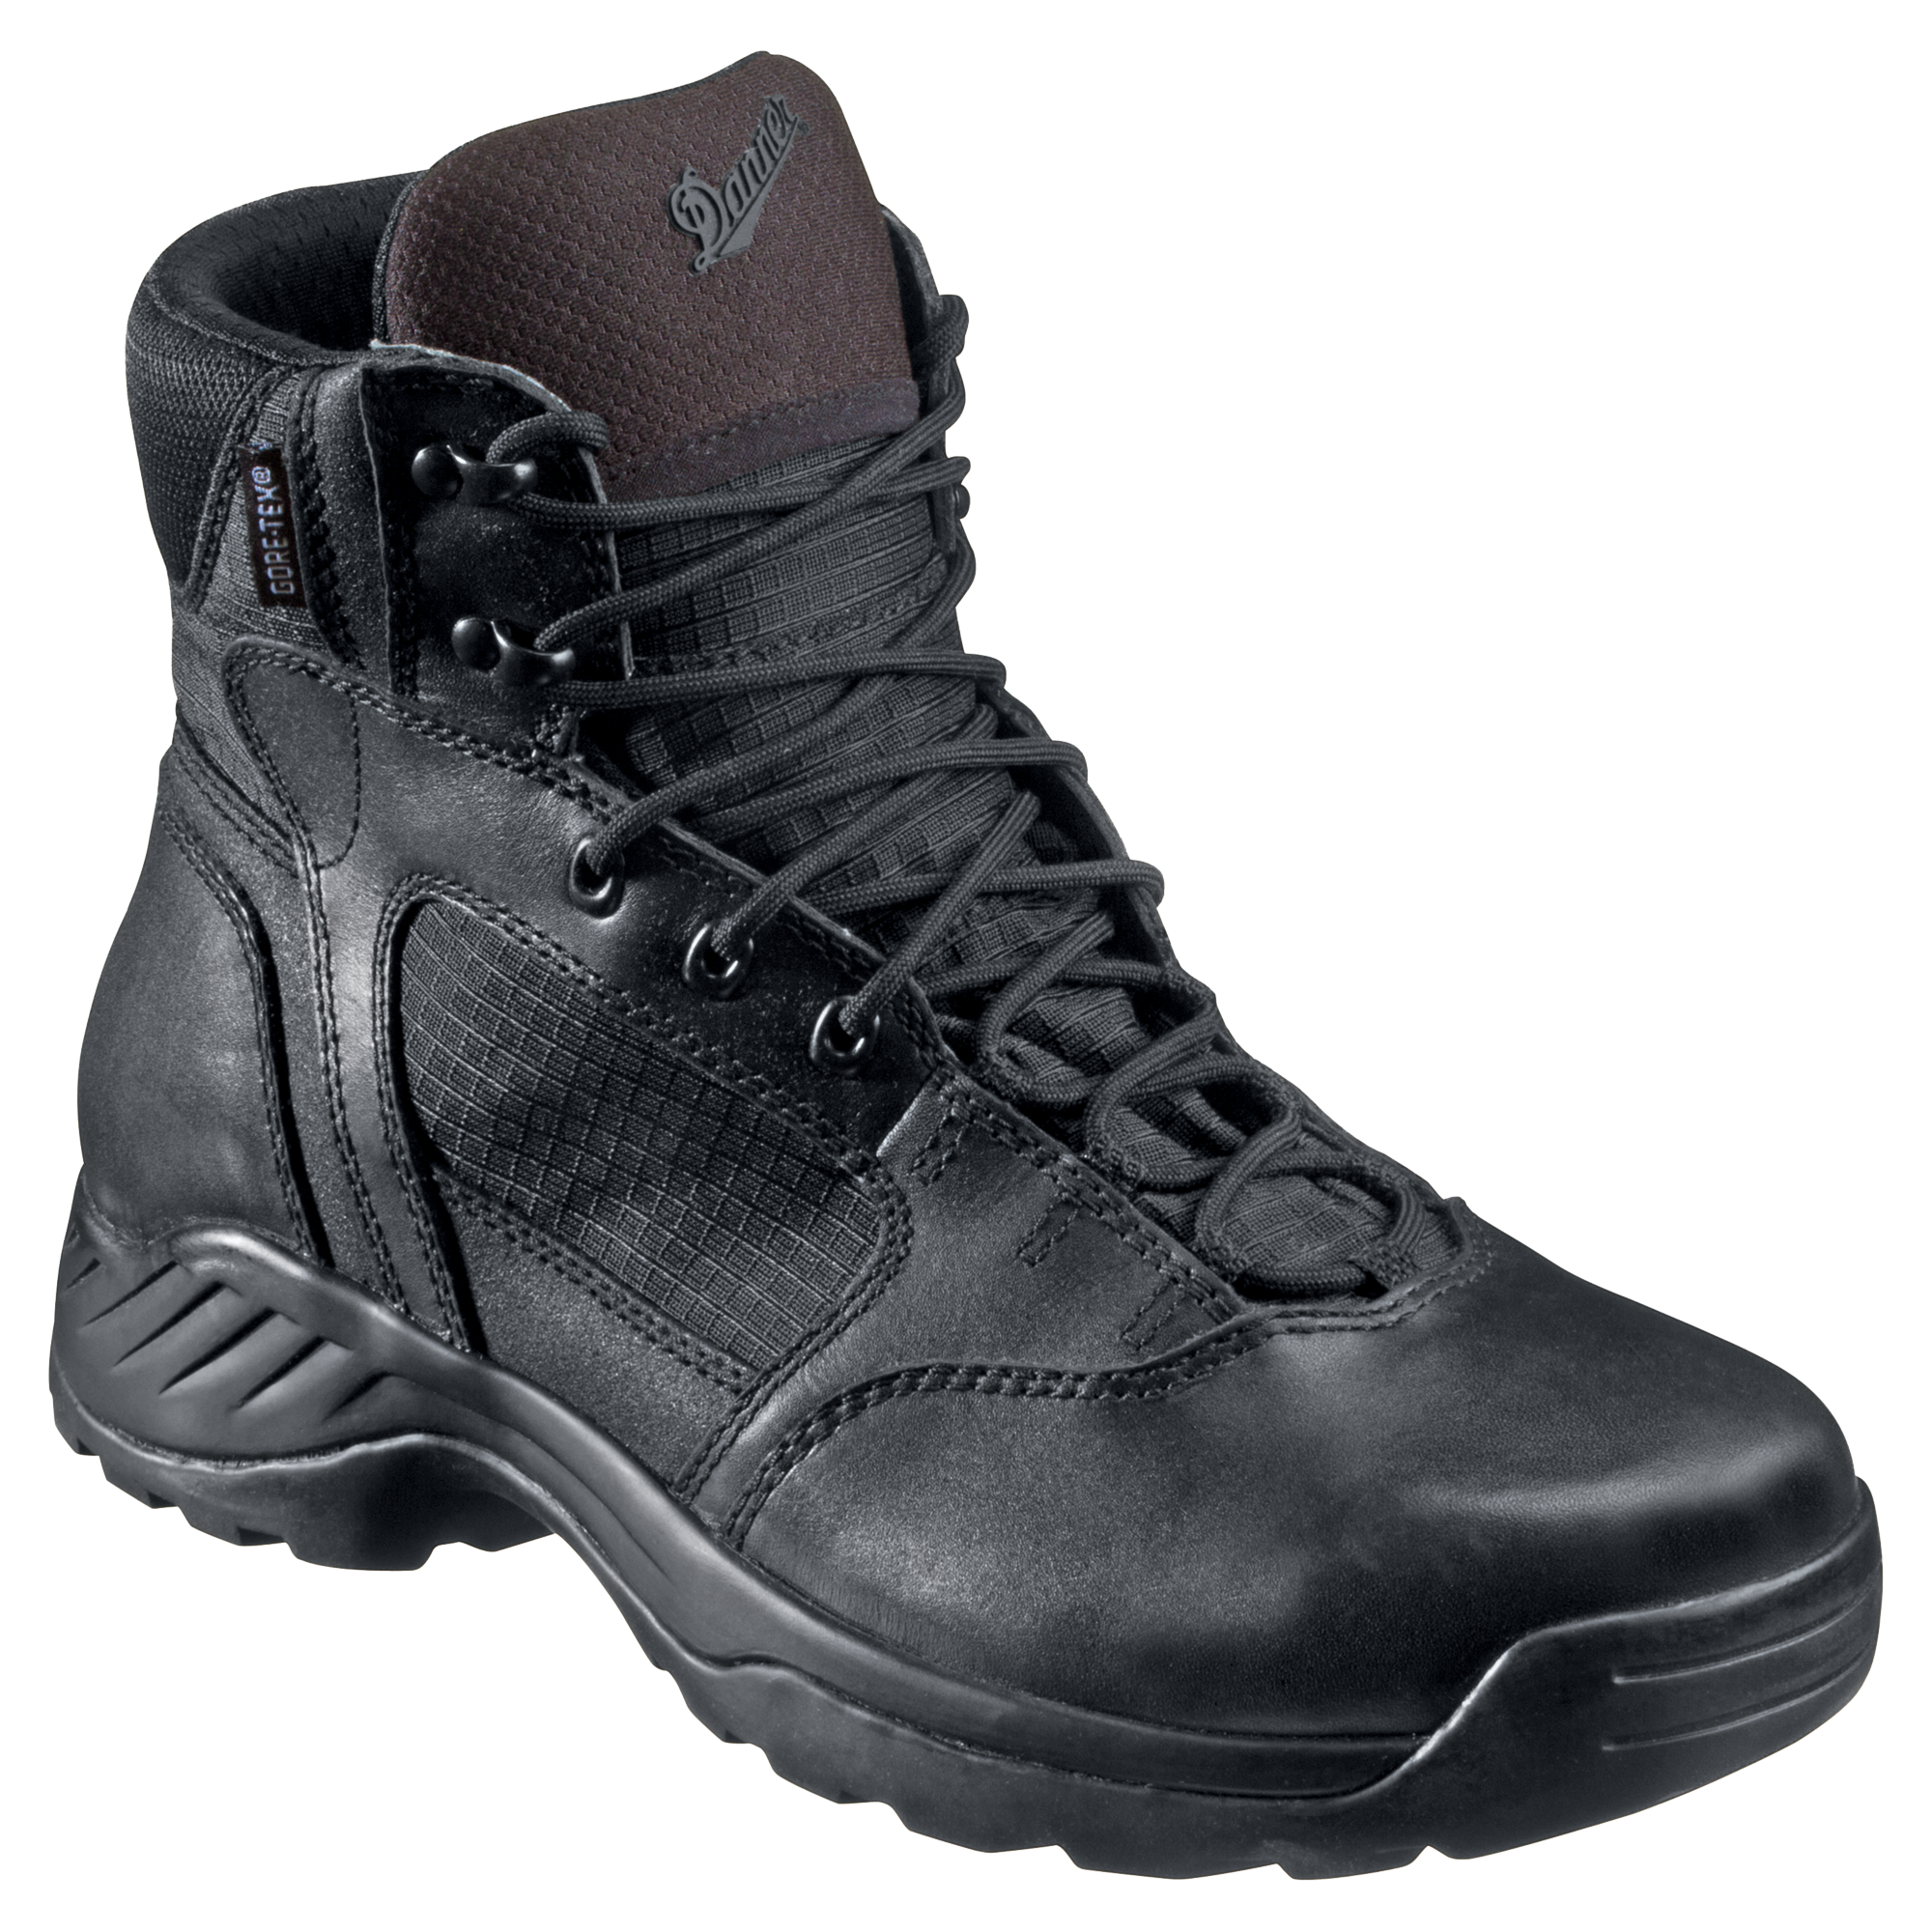 Danner Kinetic Side-Zip GORE-TEX Work Boots for Men - Black - 12W